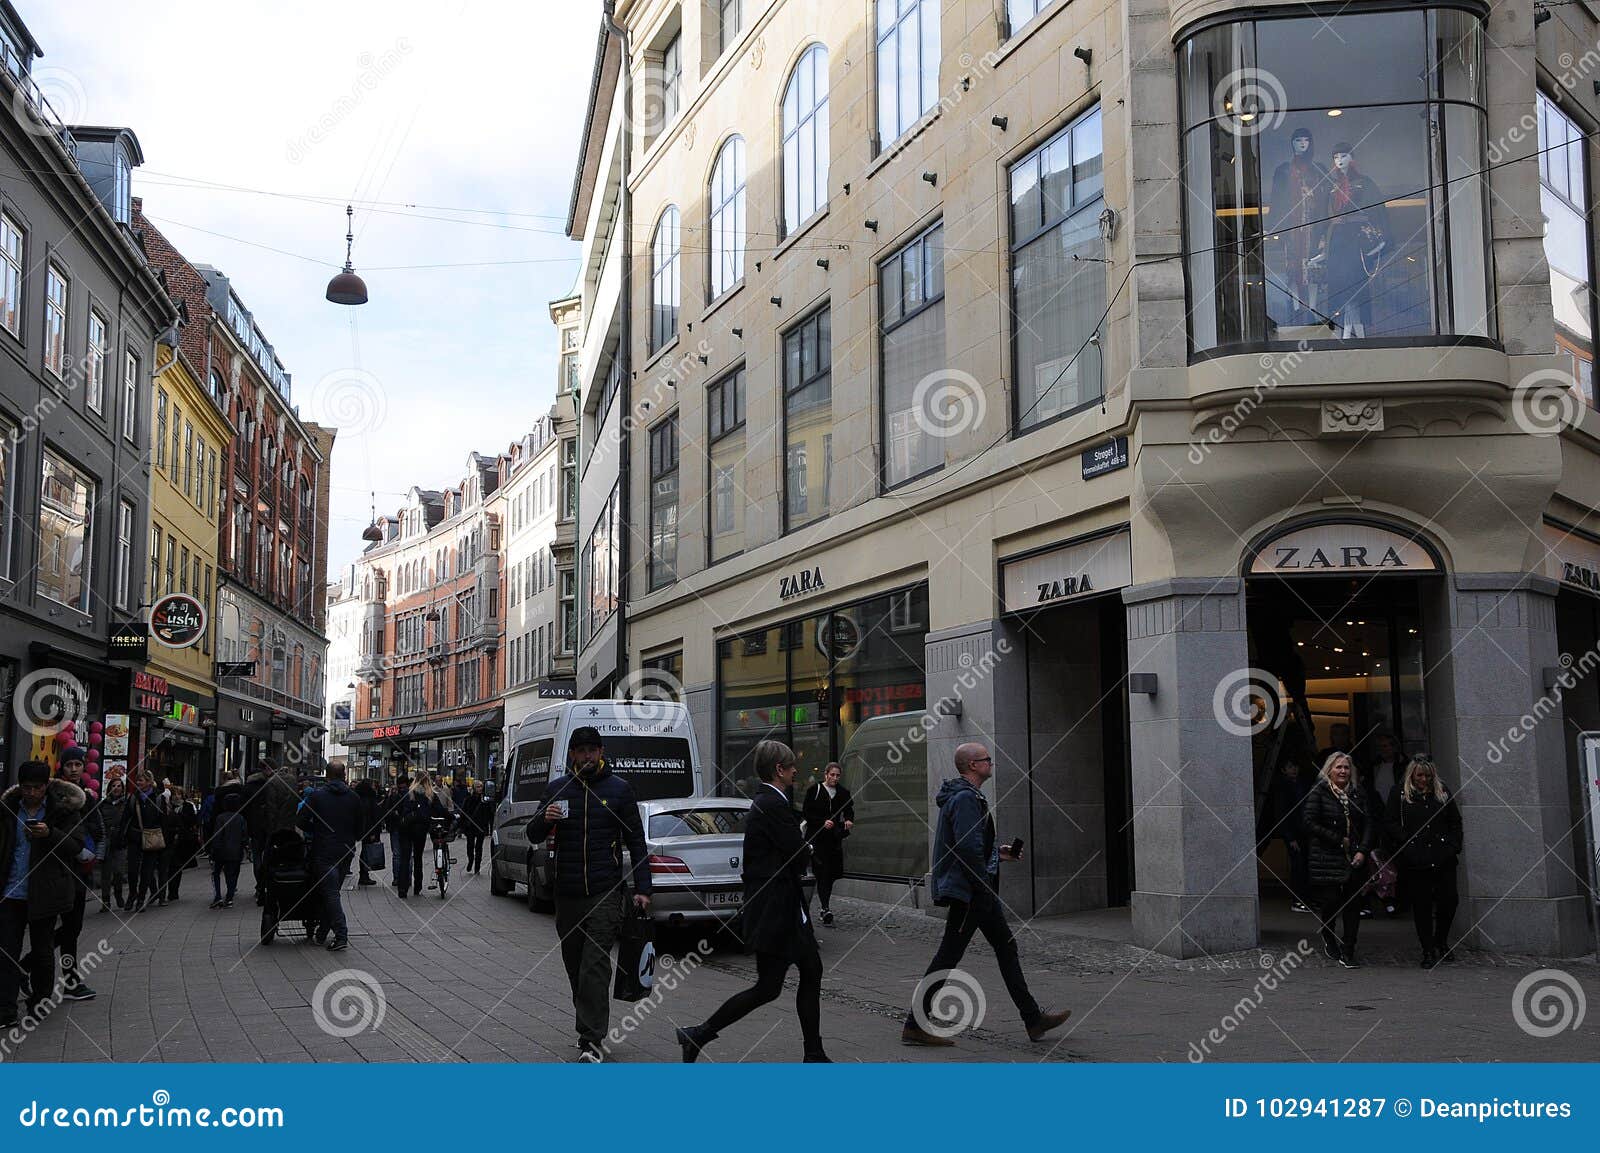 STORE in COPENHAGEN, DENMARK Editorial Photography - Image of store, denmark: 102941287